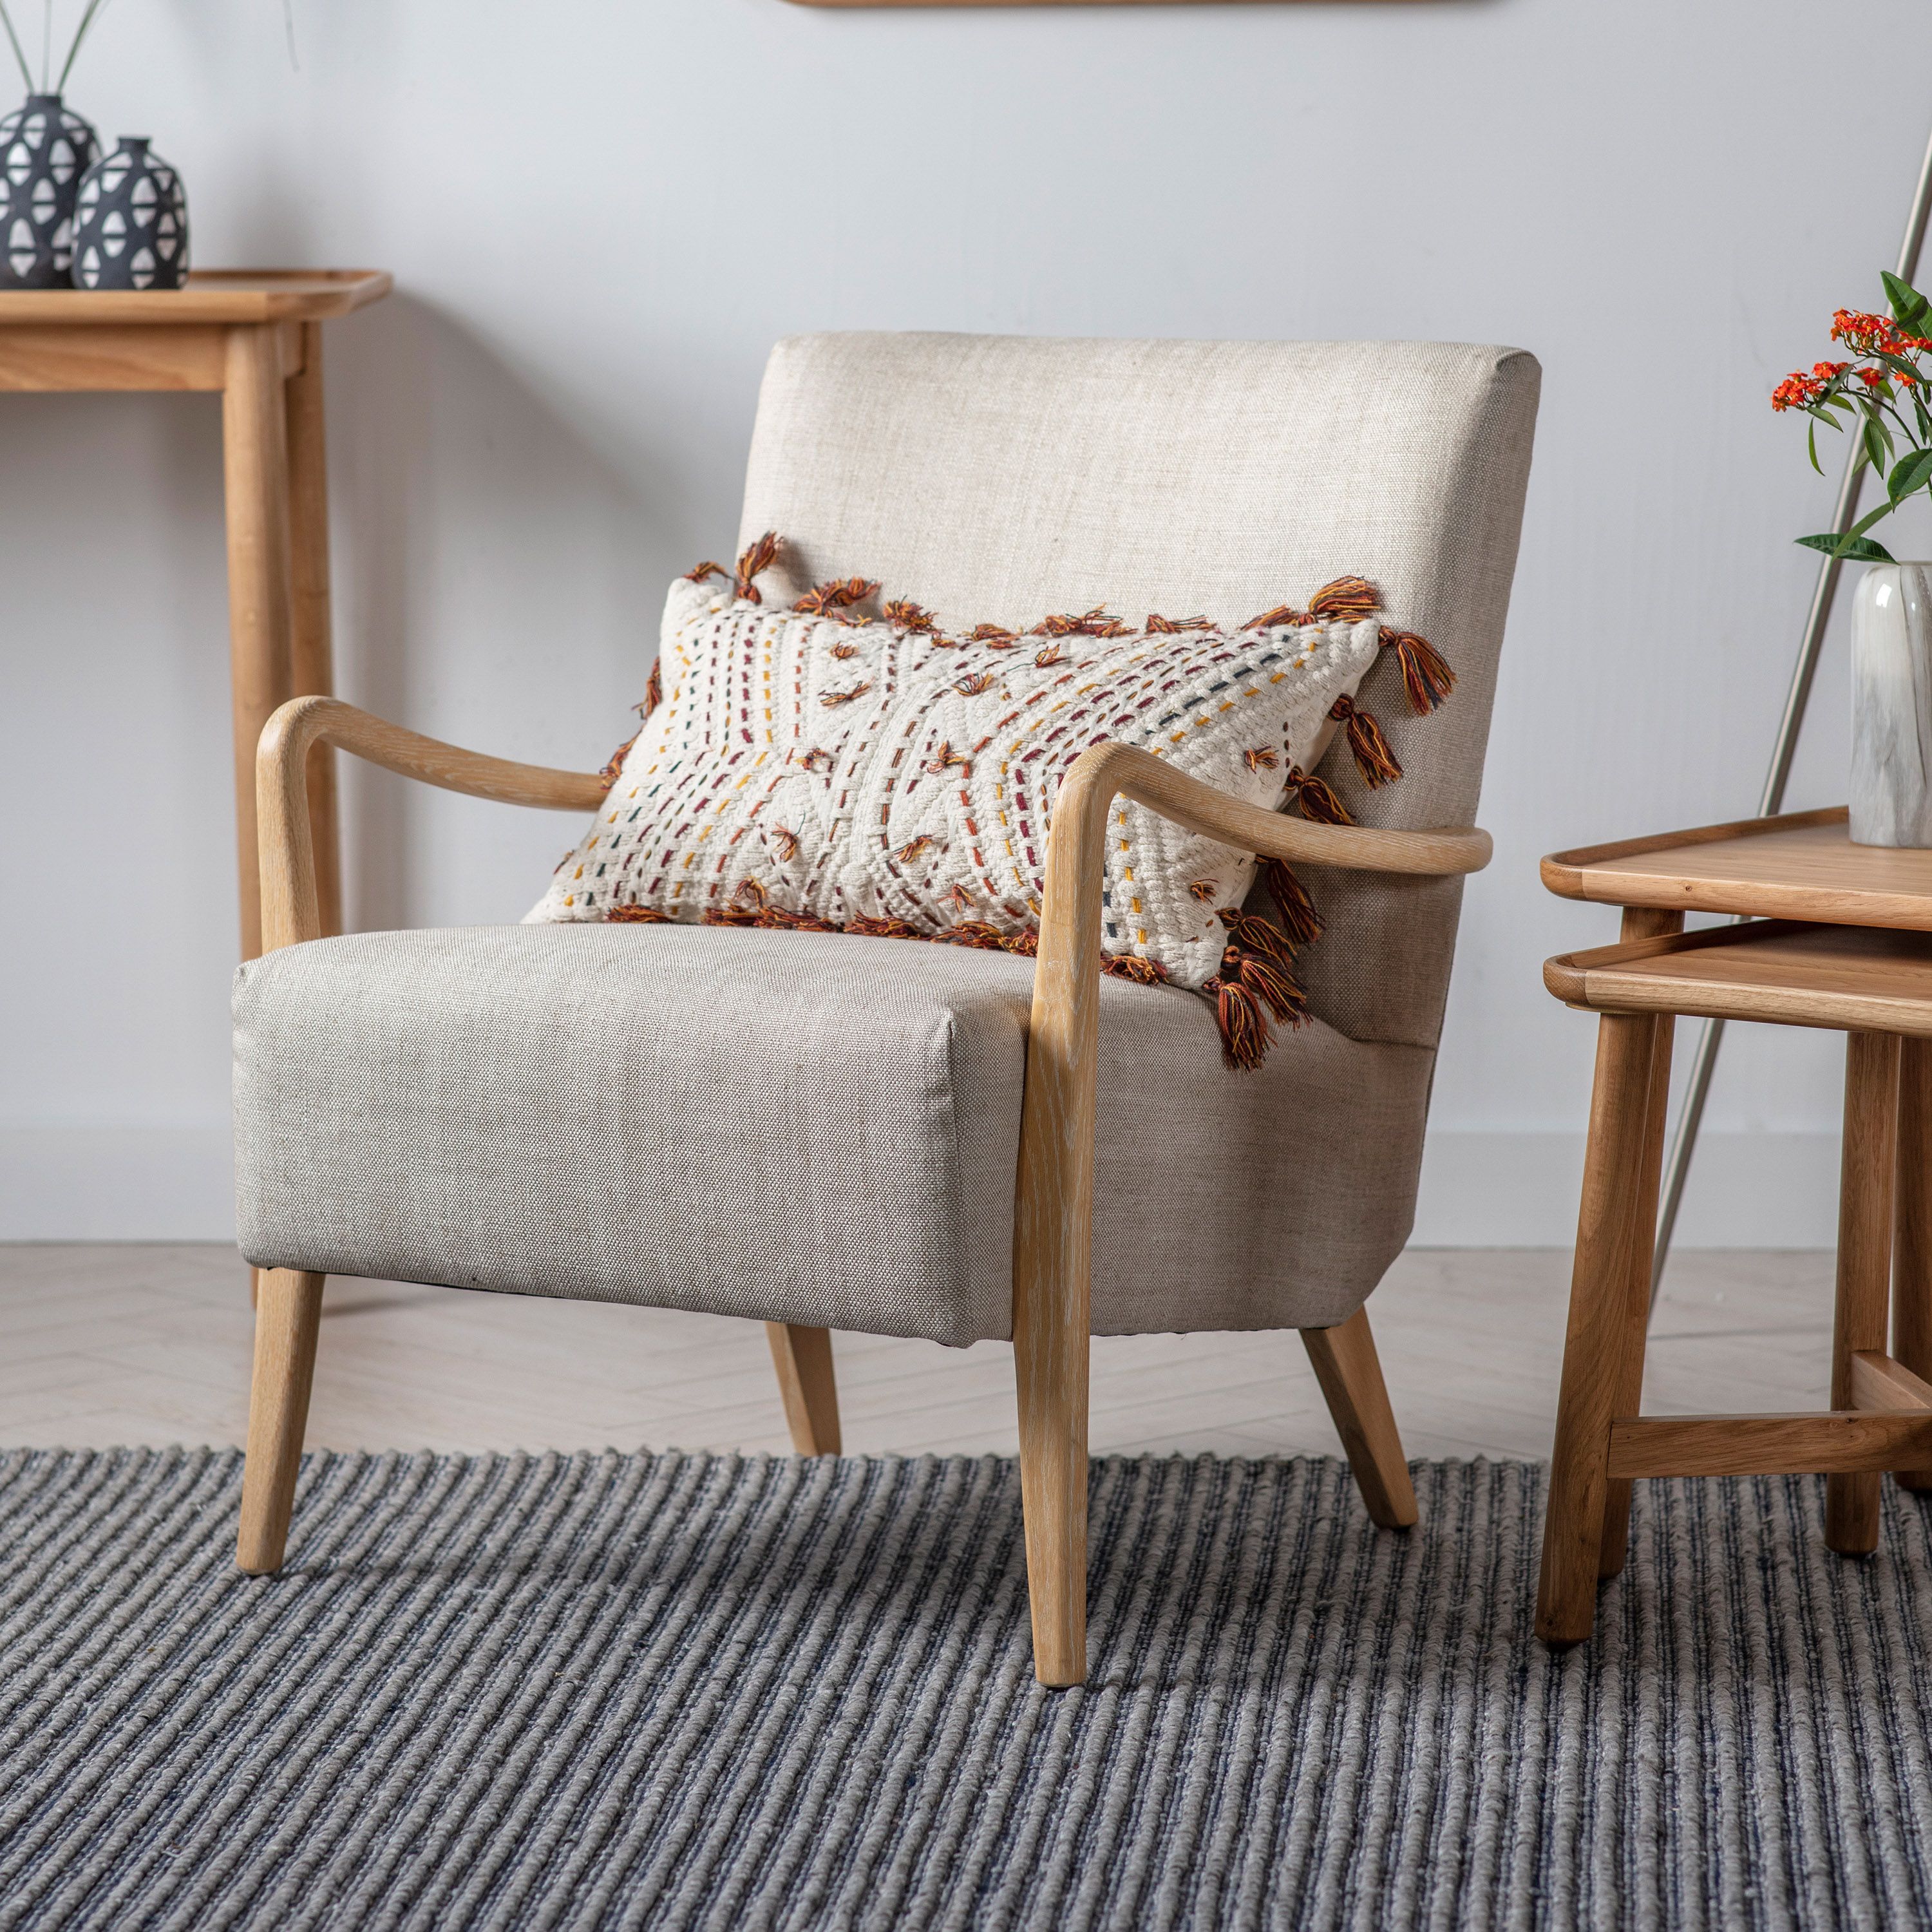 Edelmar Solid Oak Armchair Upholstered in Natural Linen - Maison Rêves UK